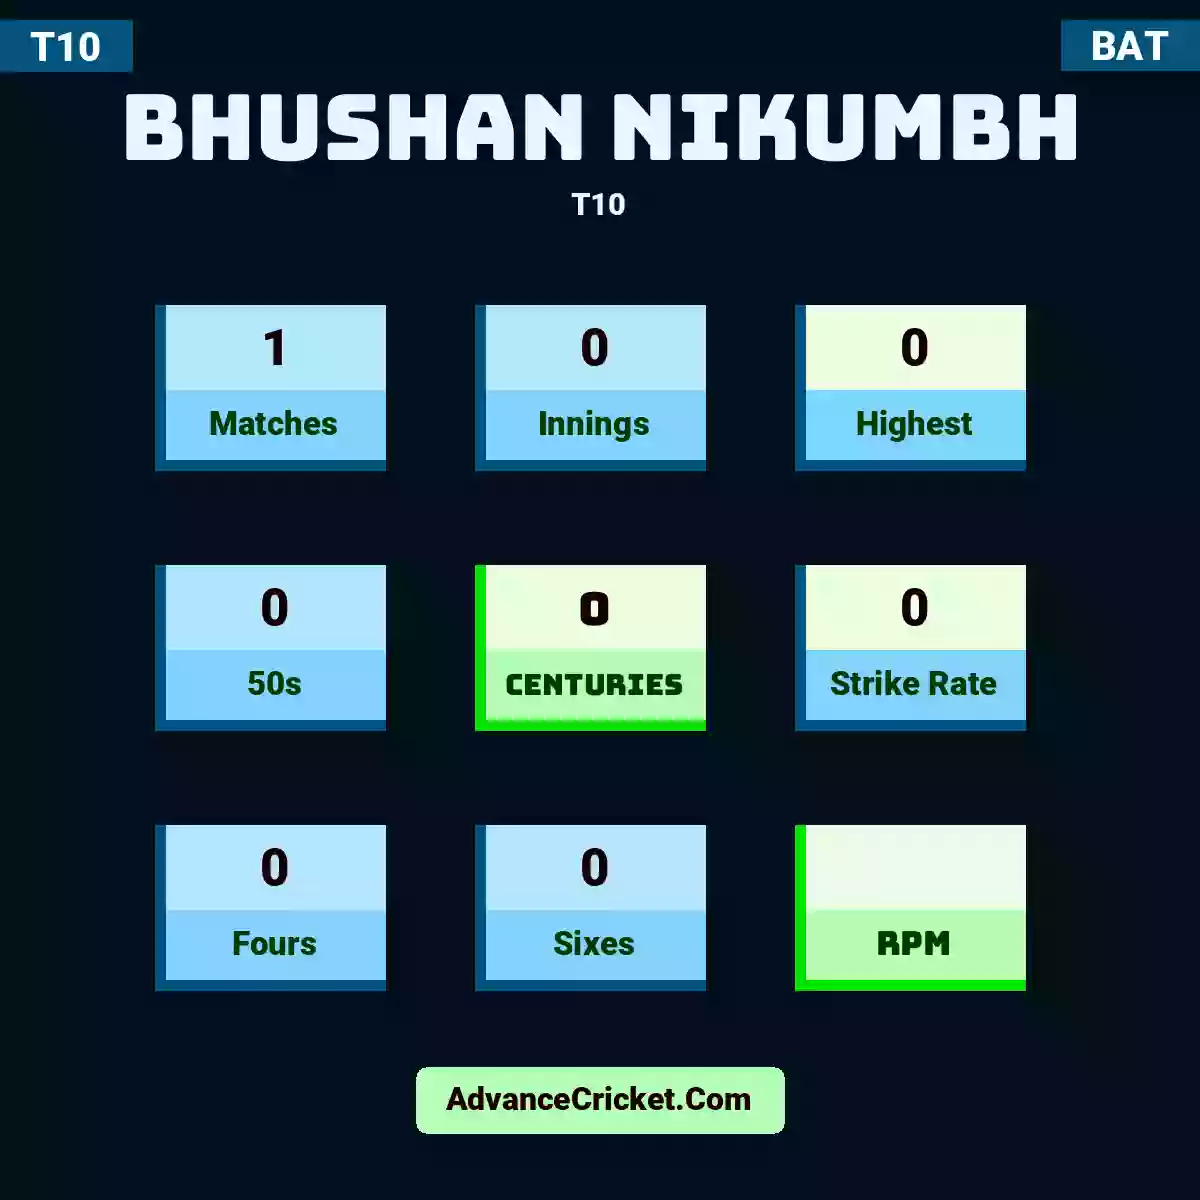 Bhushan Nikumbh T10 , Bhushan Nikumbh played 1 matches, scored 0 runs as highest, 0 half-centuries, and 0 centuries, with a strike rate of 0. B.Nikumbh hit 0 fours and 0 sixes.